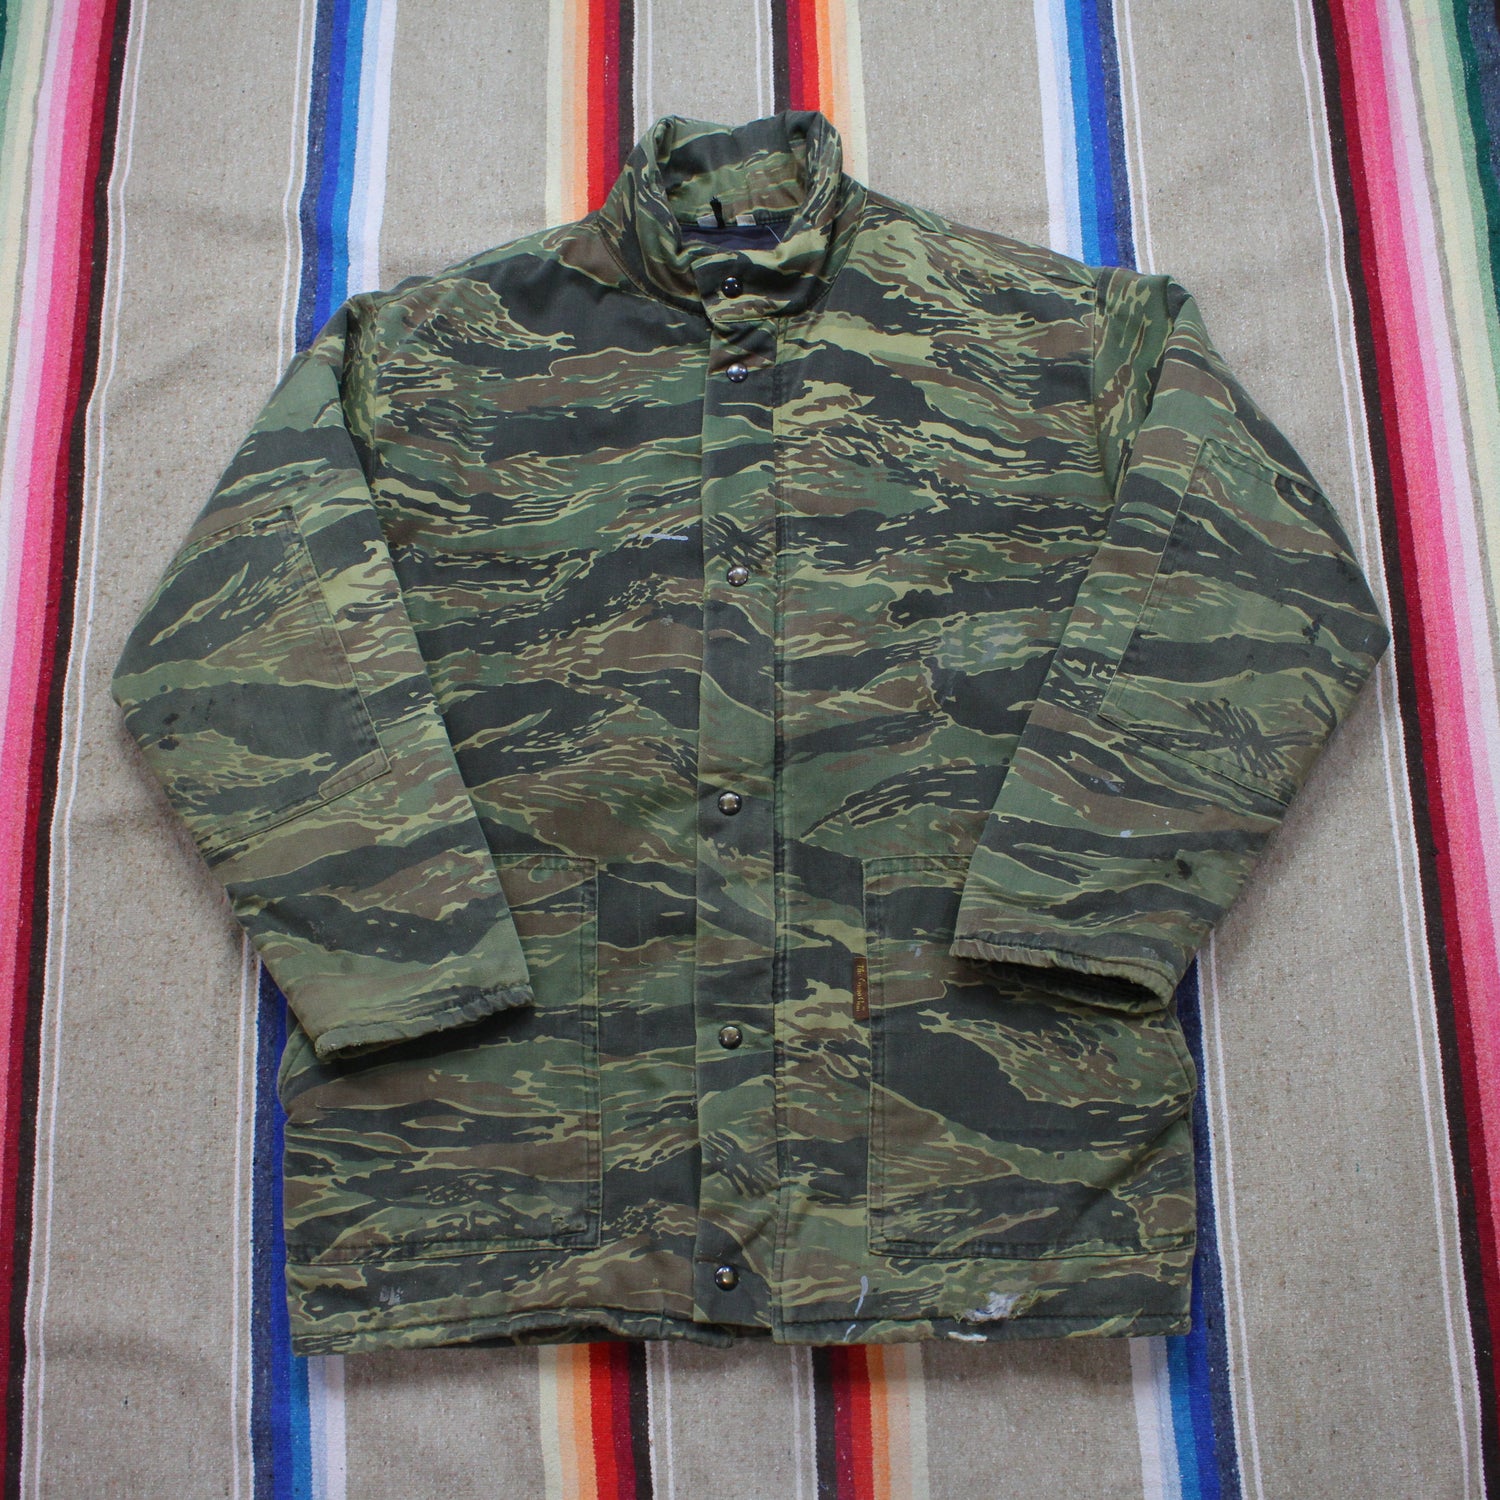 Hunting/Military Jackets